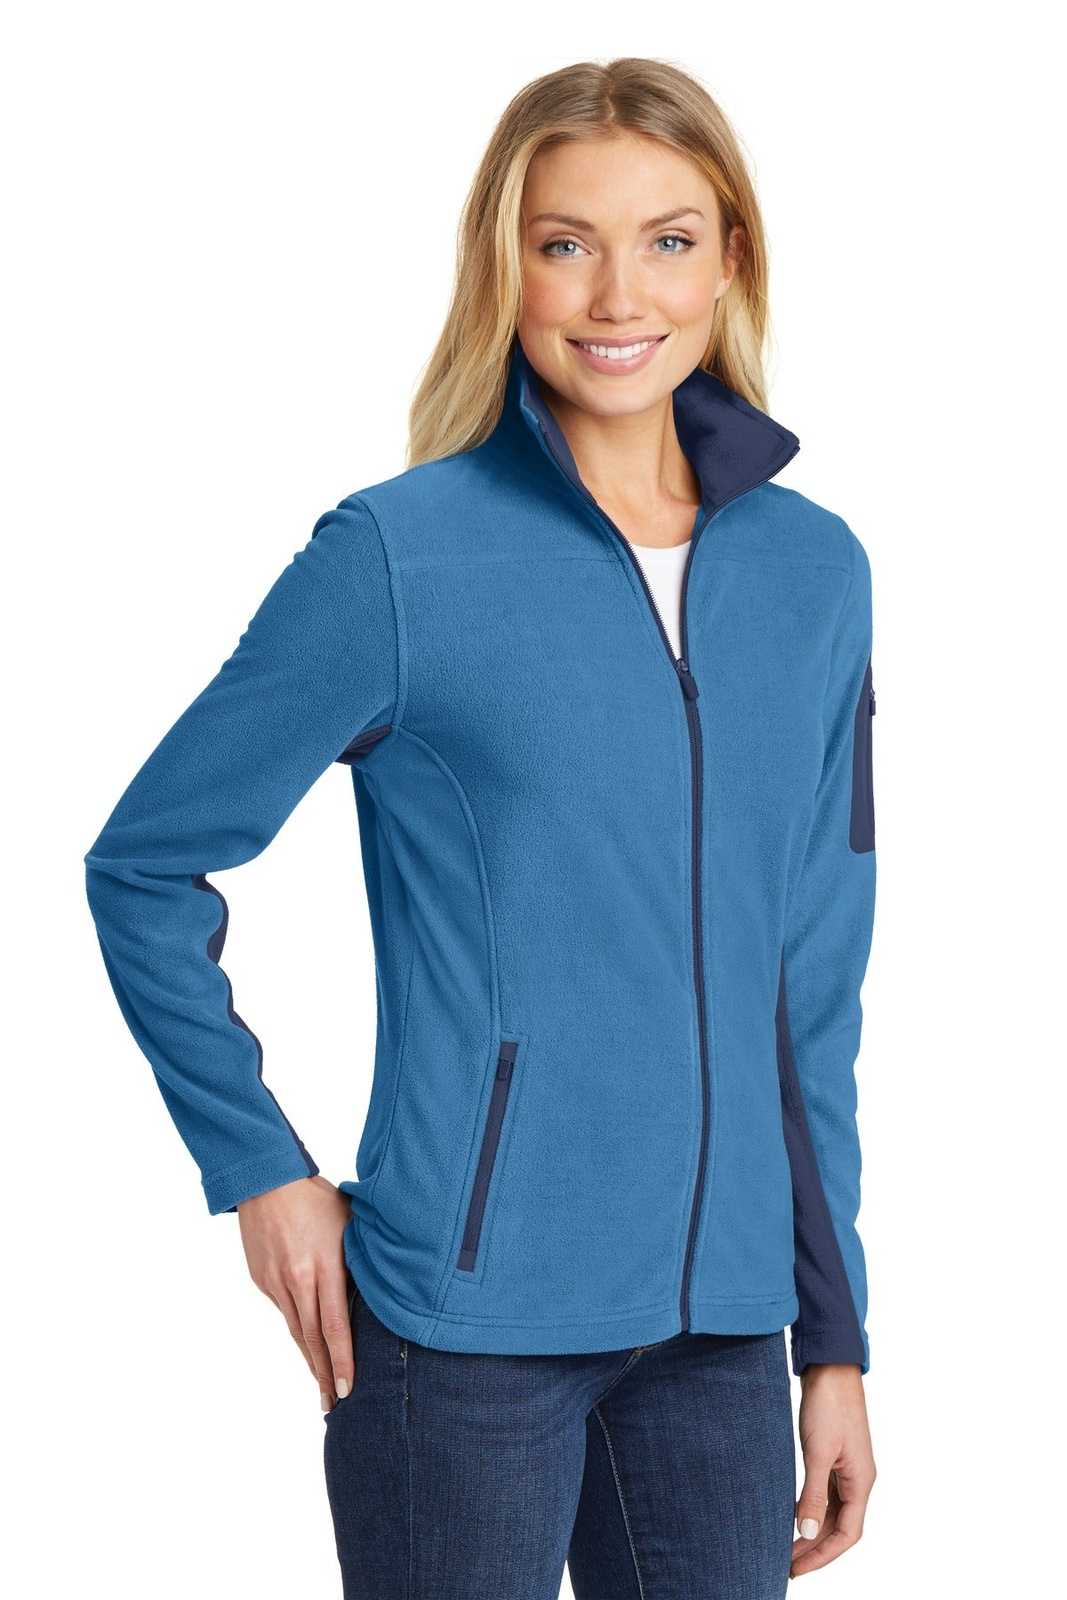 Port Authority L233 Ladies Summit Fleece Full-Zip Jacket - Regal Blue Dress Blue Navy - HIT a Double - 4